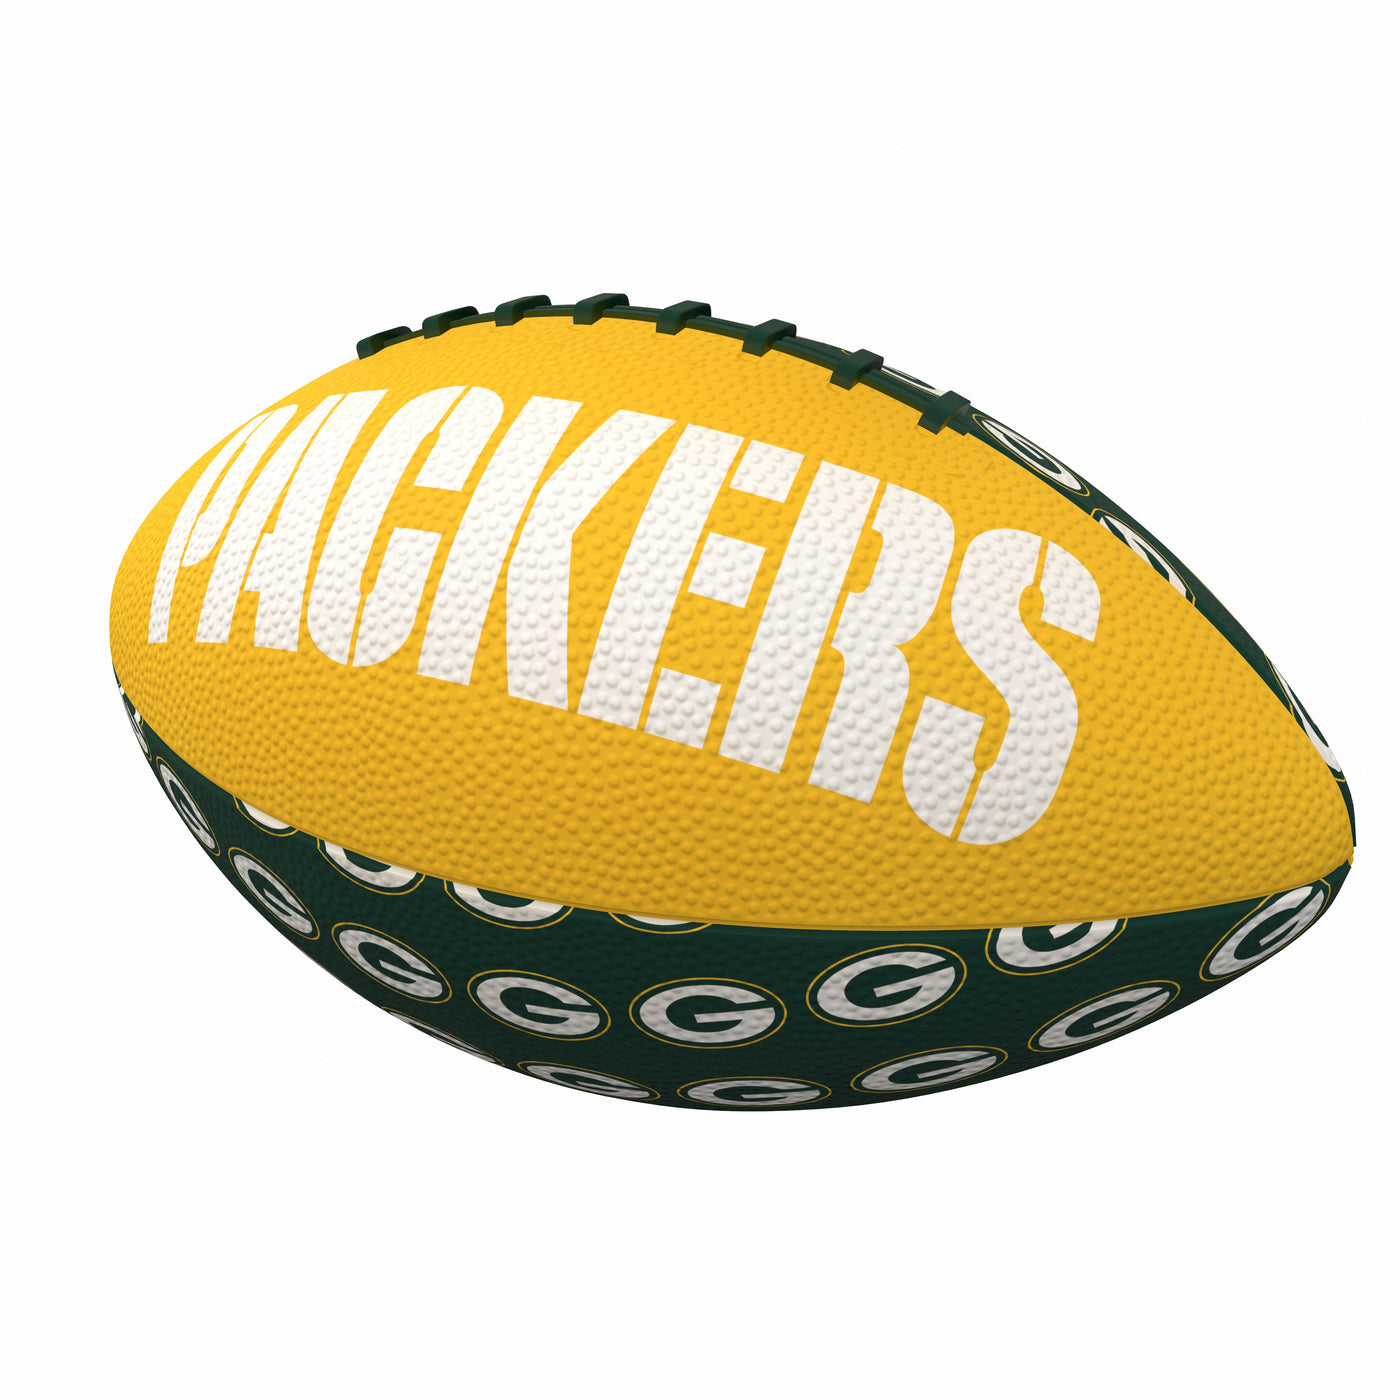 Green Bay Packers Mini Size Rubber Footballl